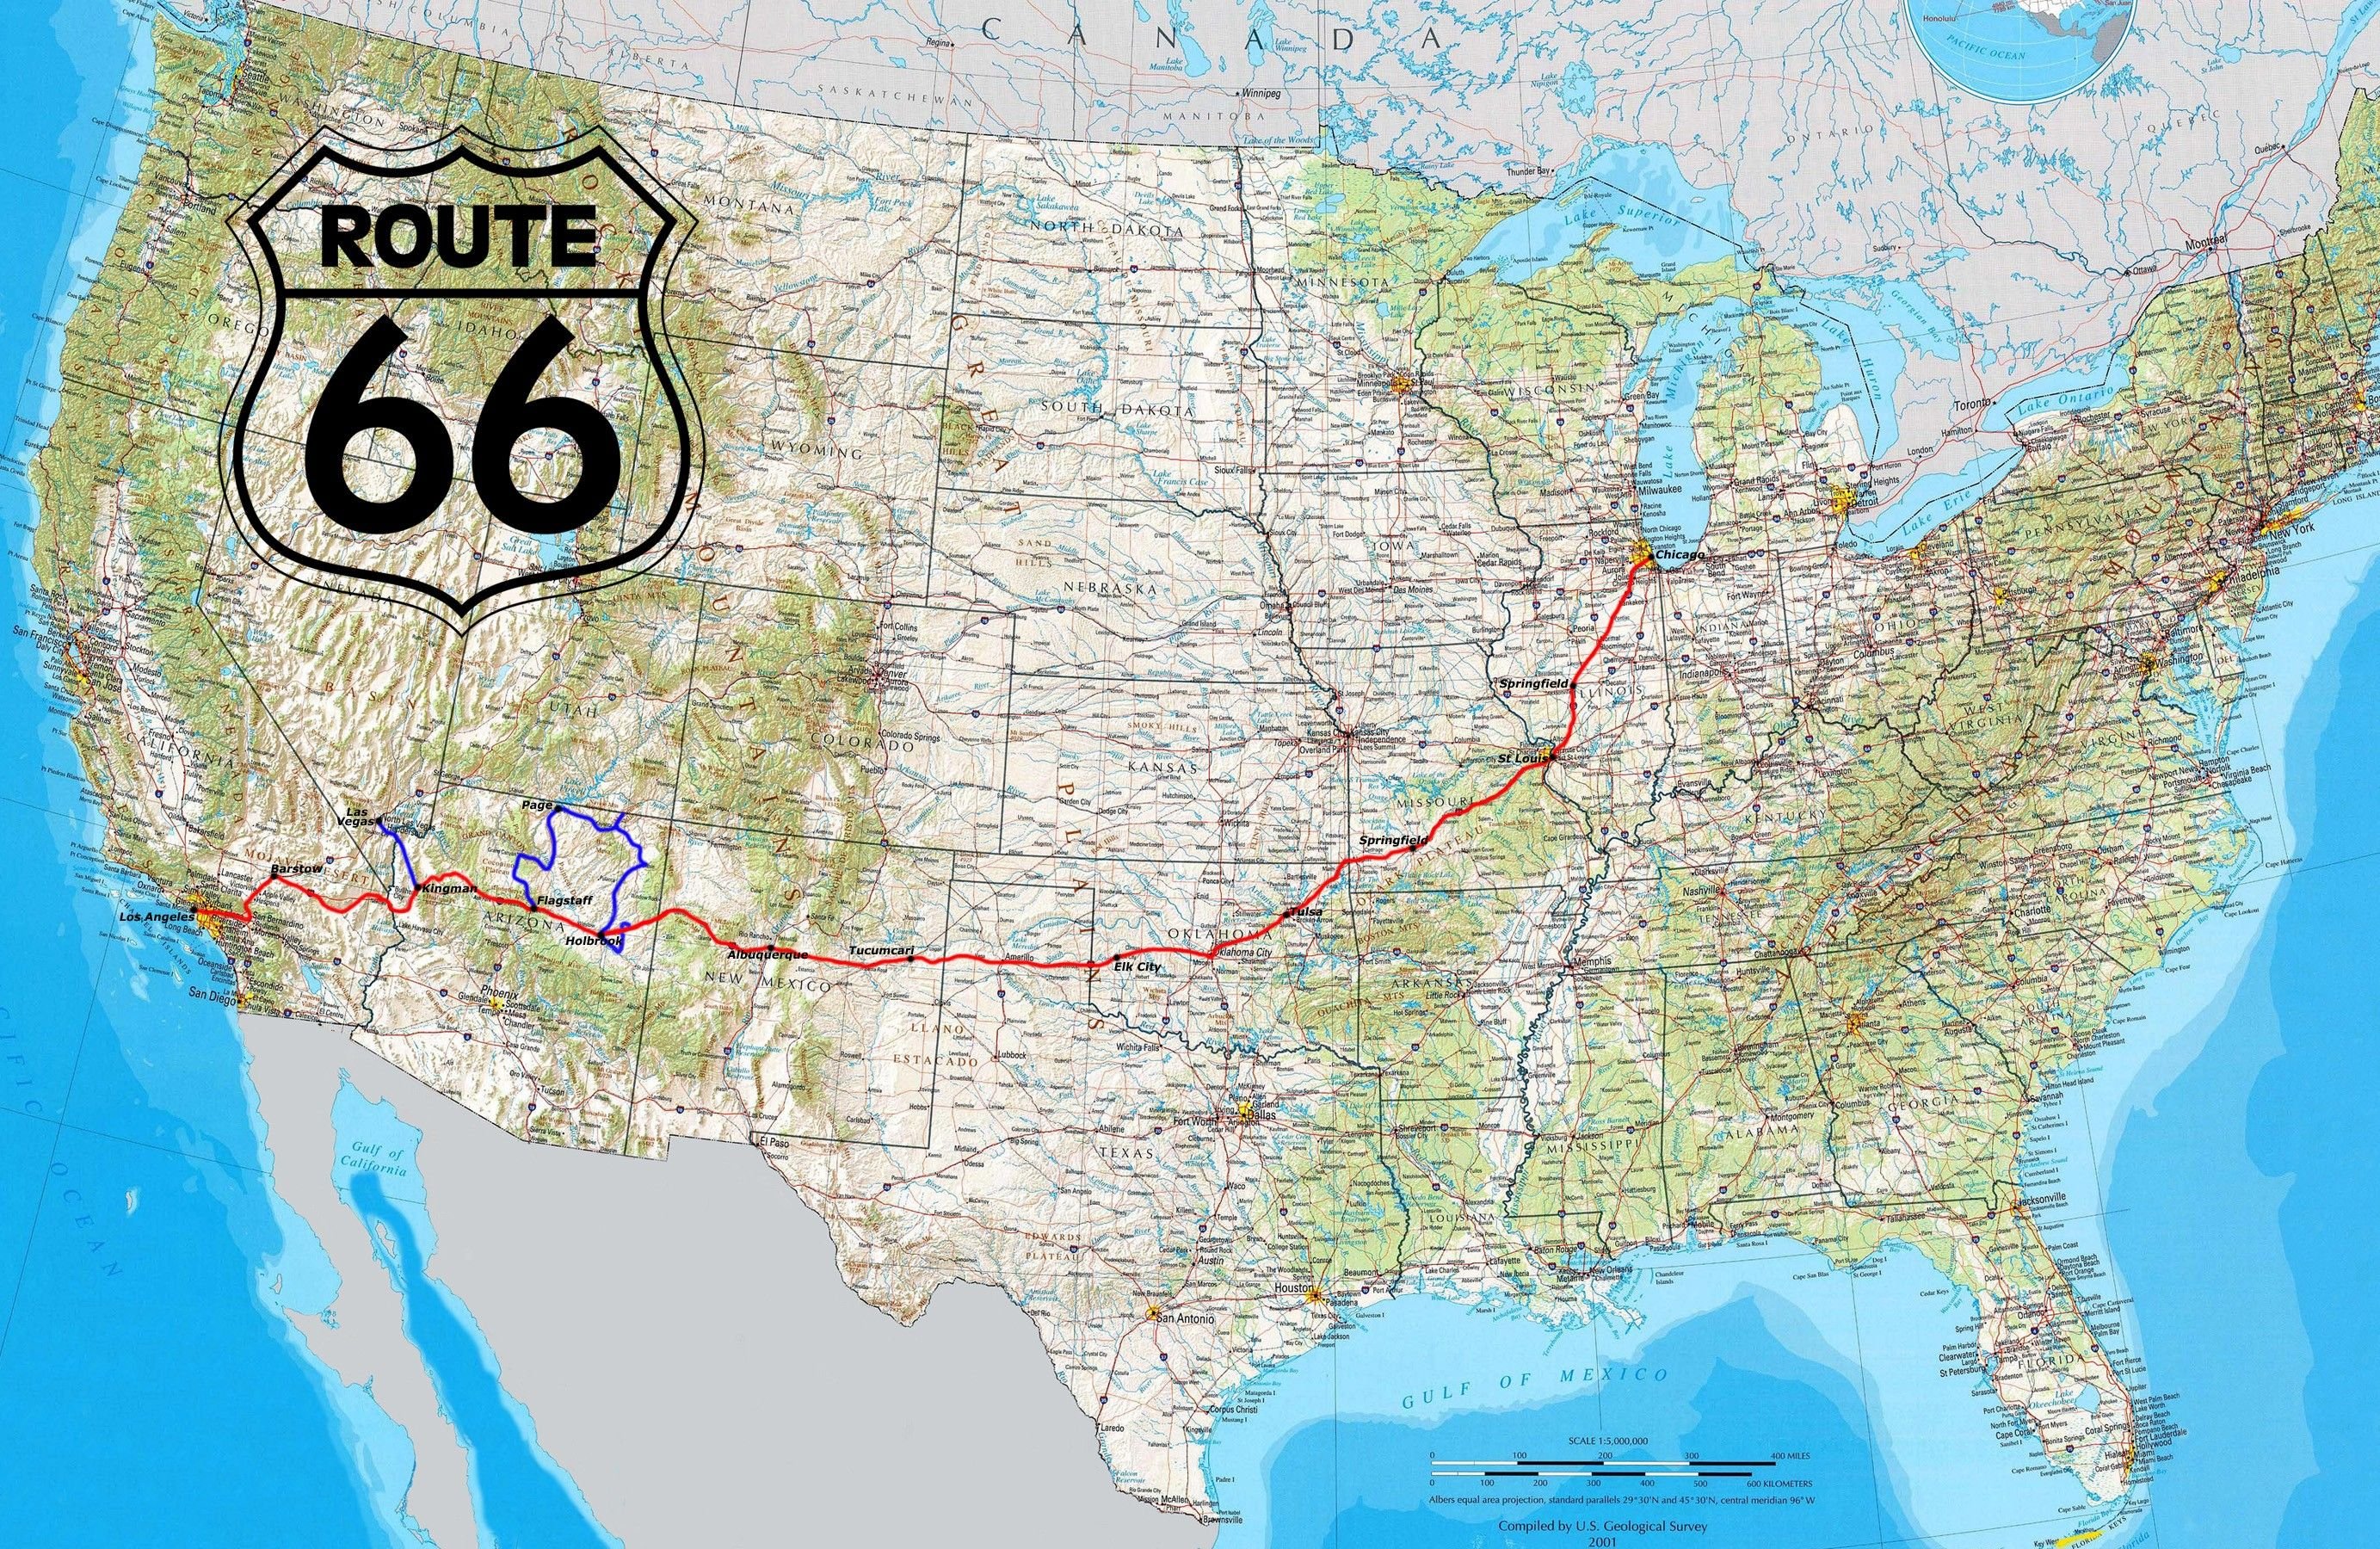 road route 66 usa highway map north america canada coast sea border